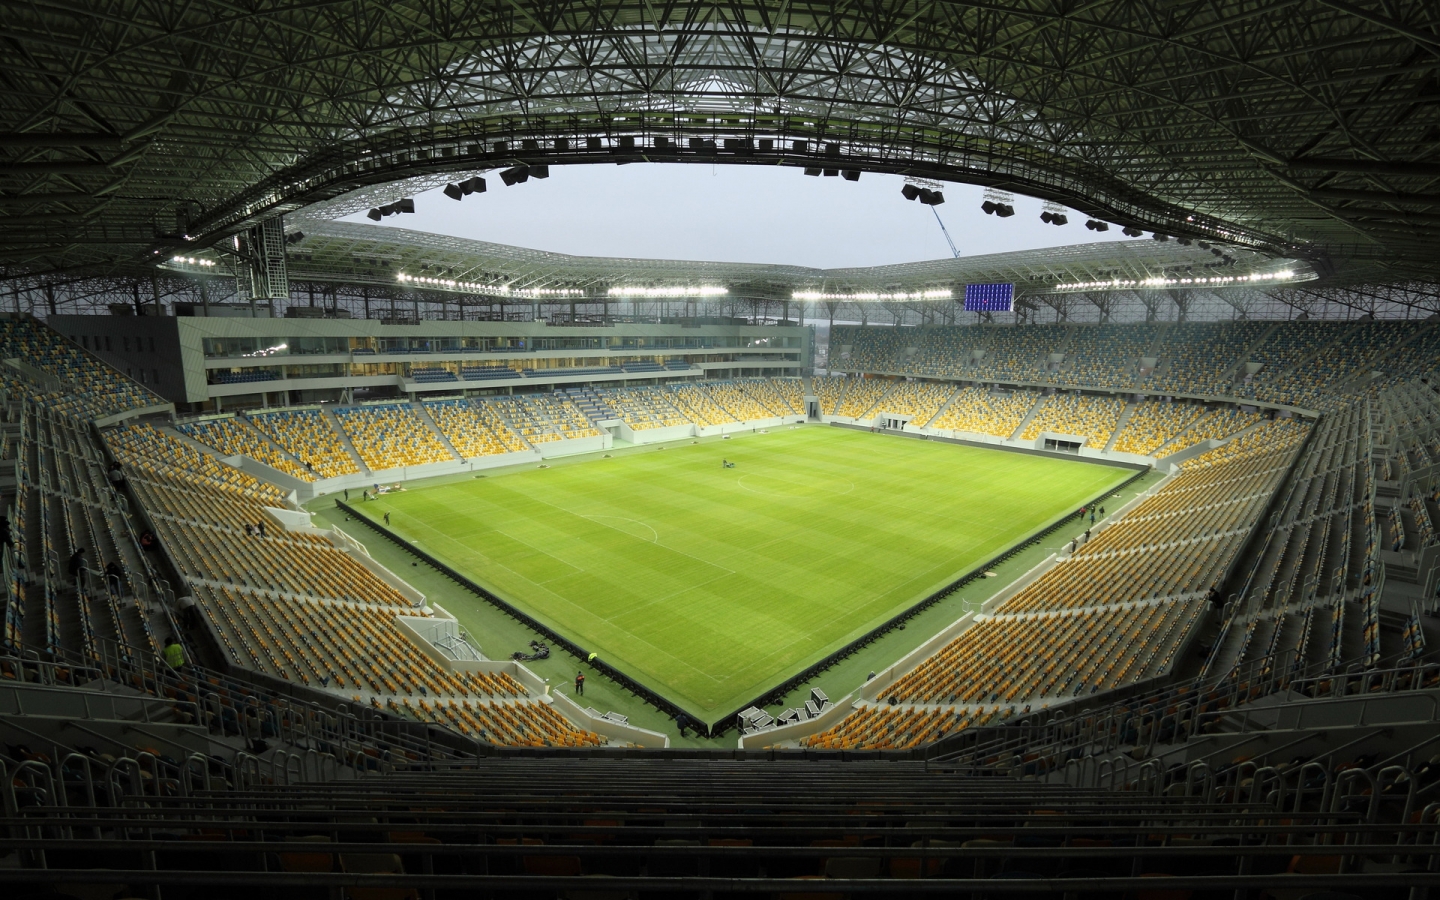 Empty Stadium for 1440 x 900 widescreen resolution